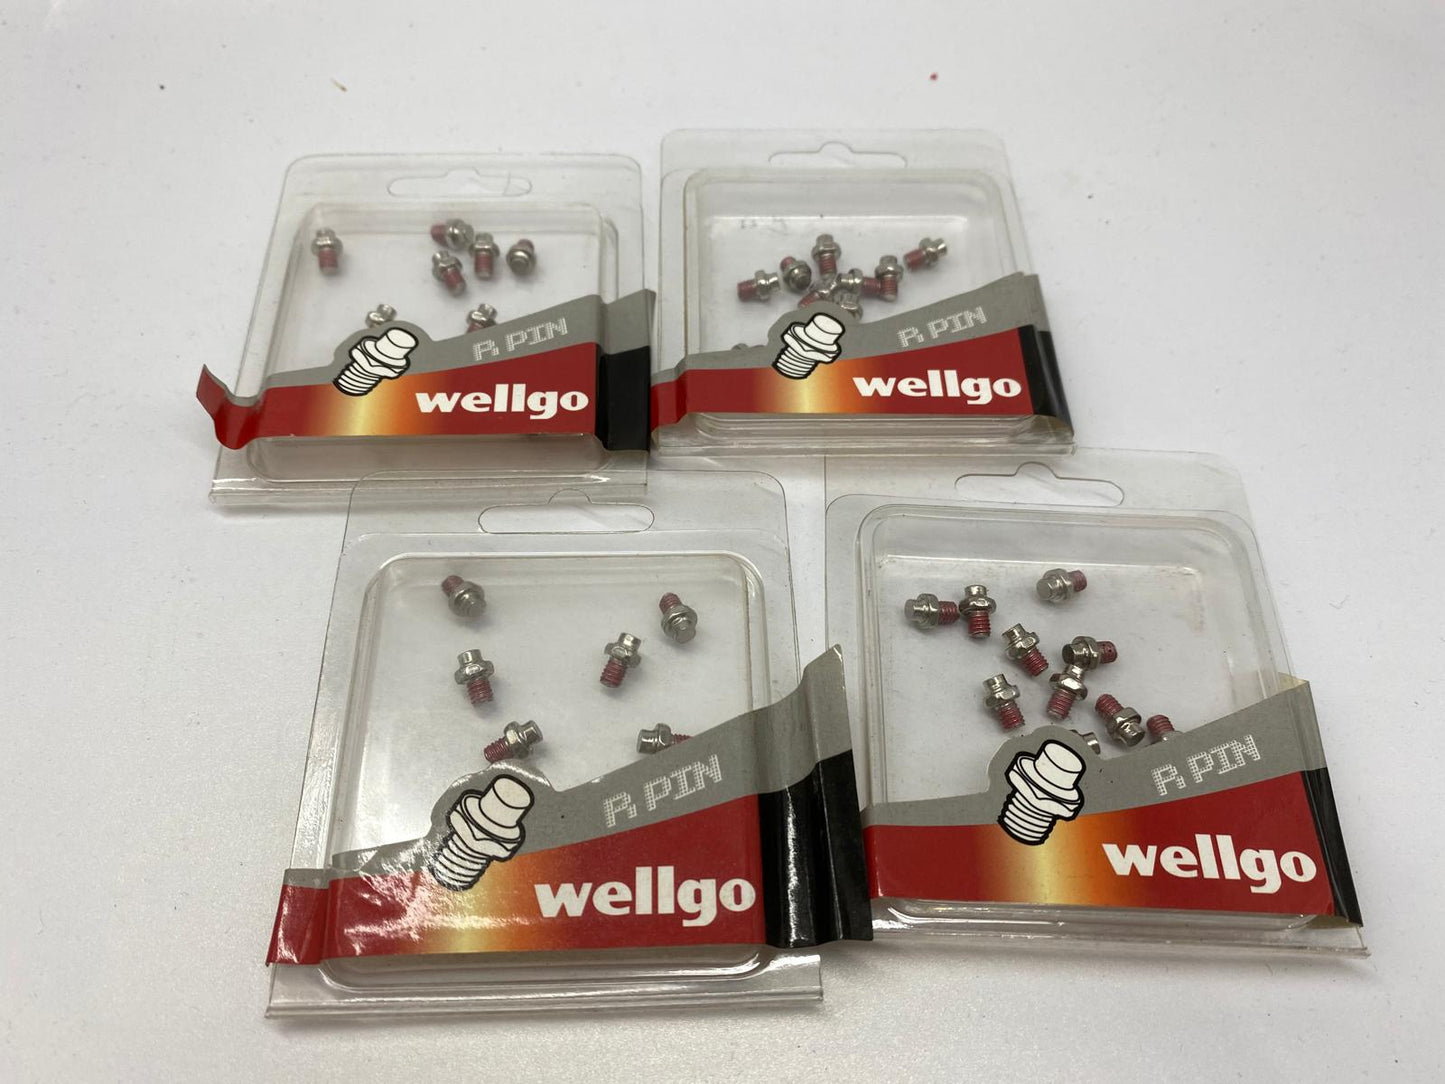 Wellgo R-PIN pedal Pins set 10pcs/set